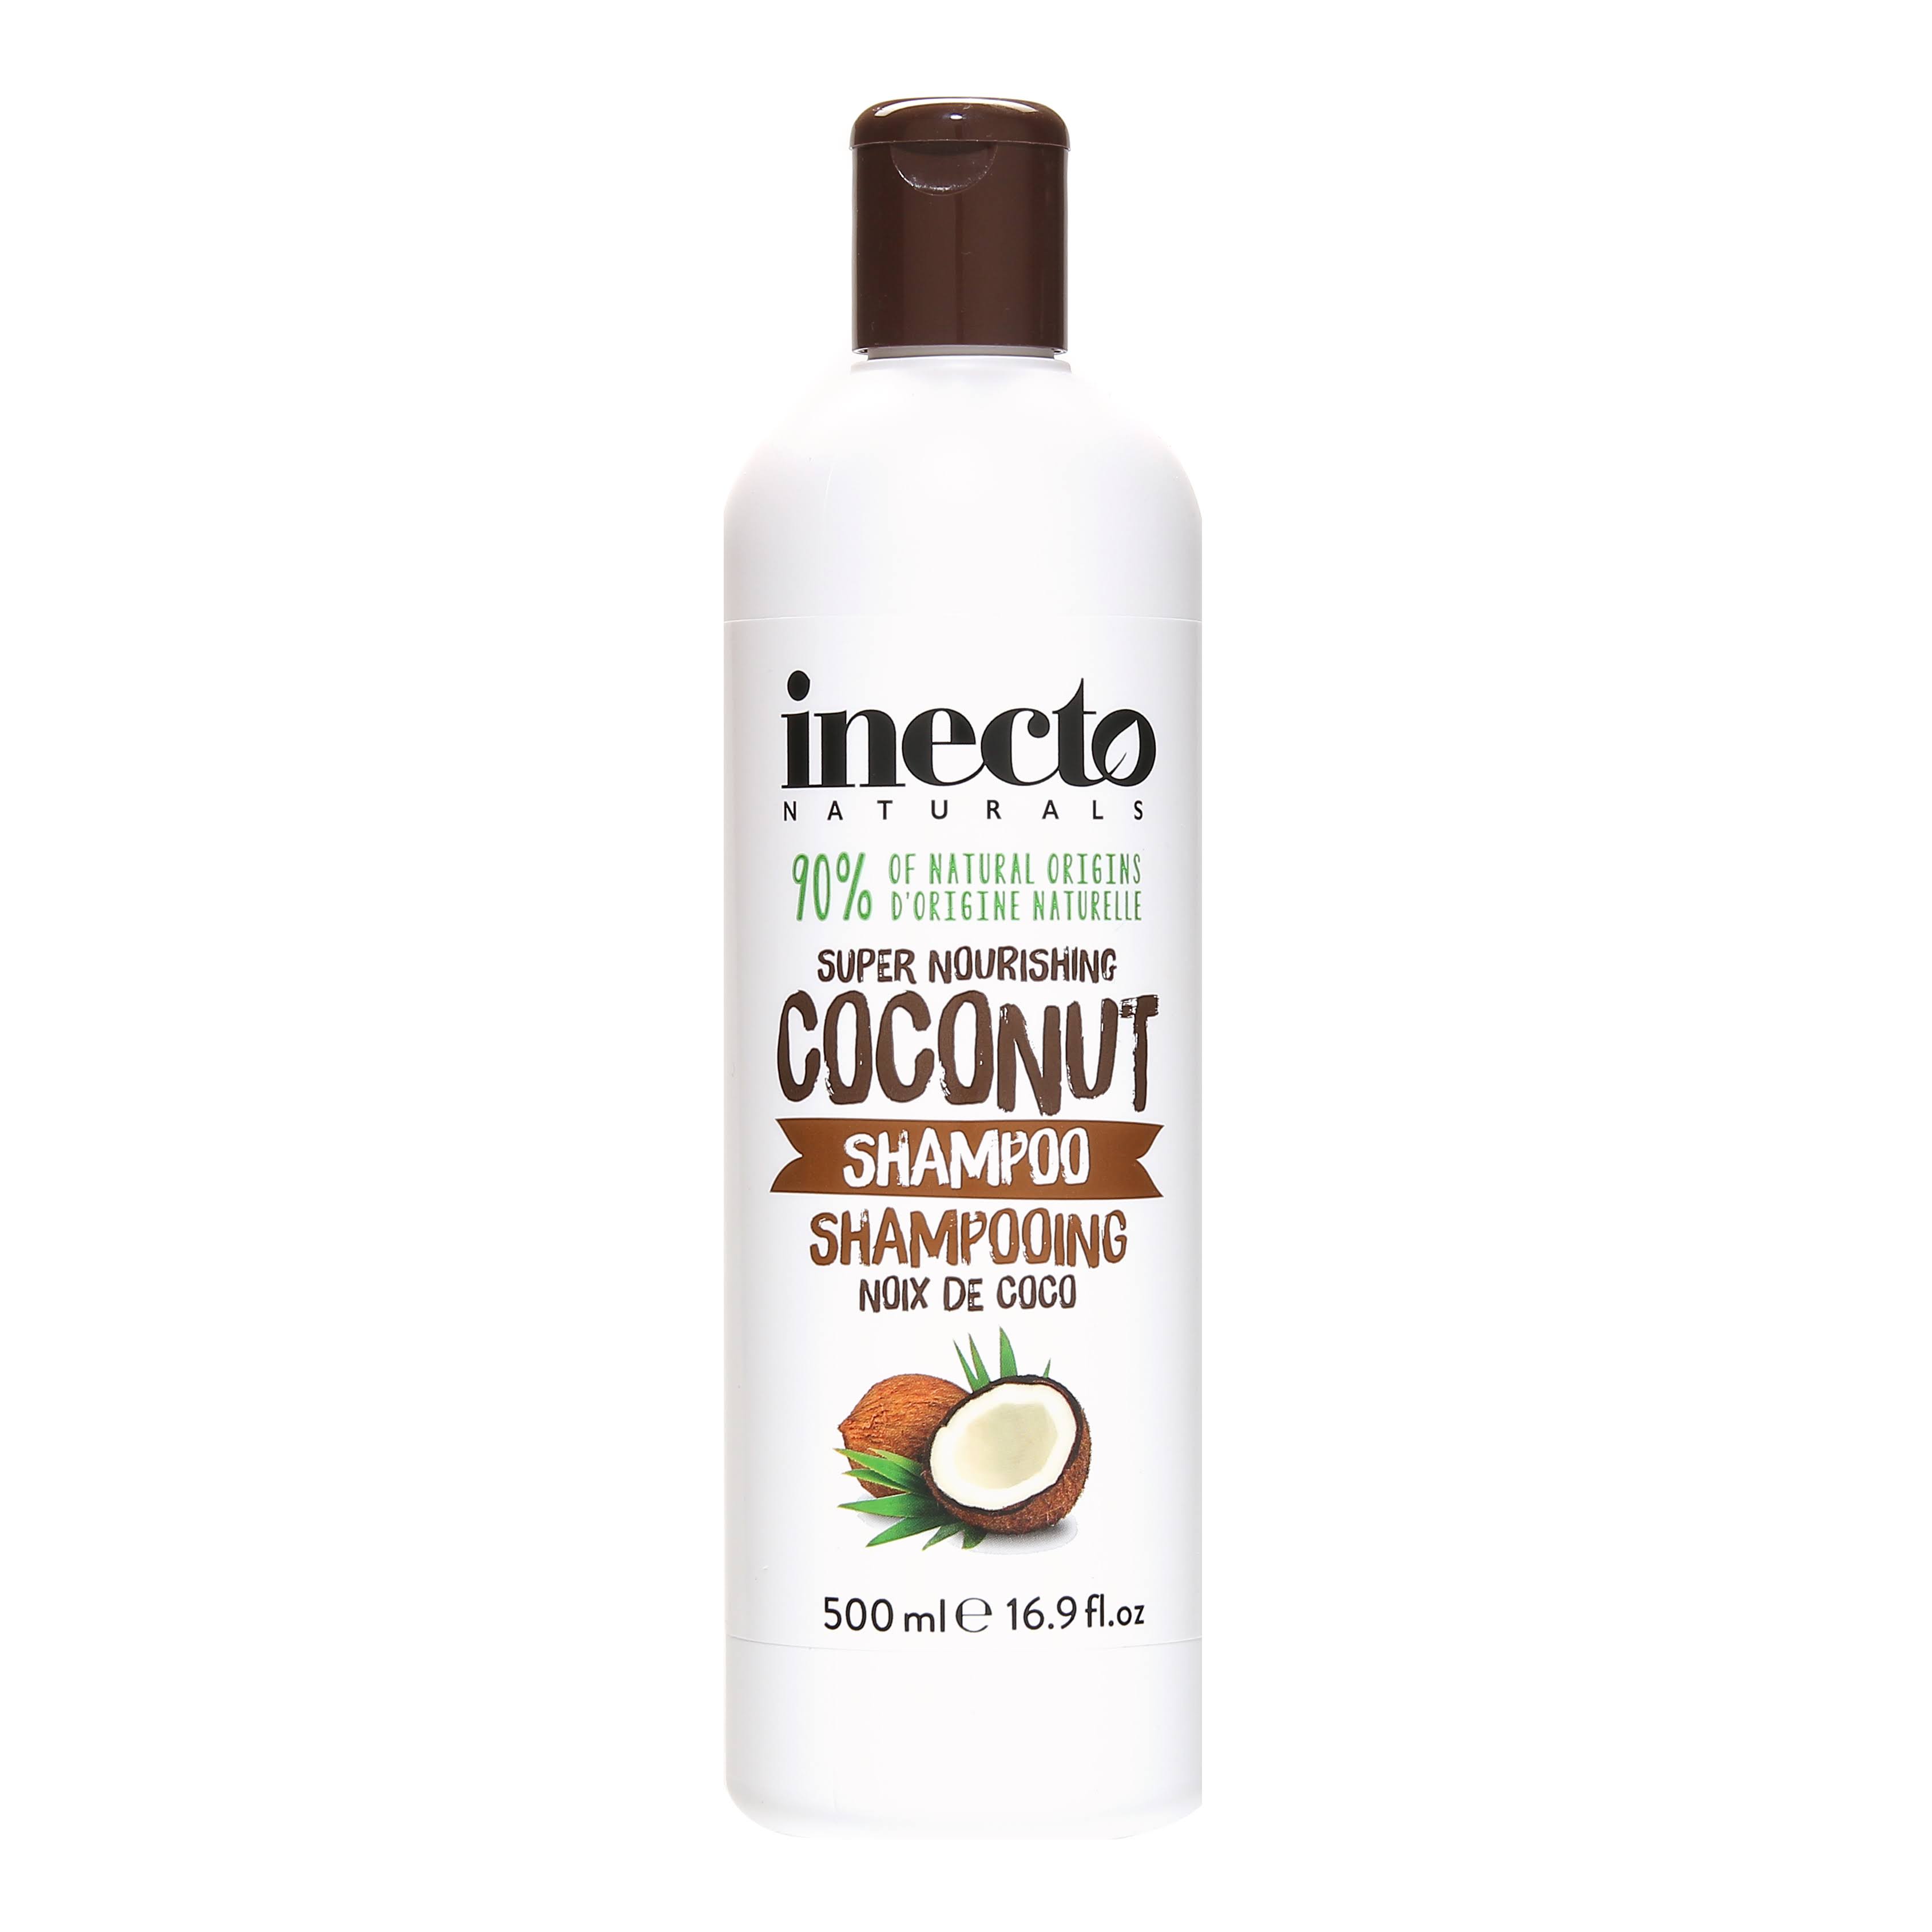 Inecto Naturals Shampoo - 500ml, Coconut